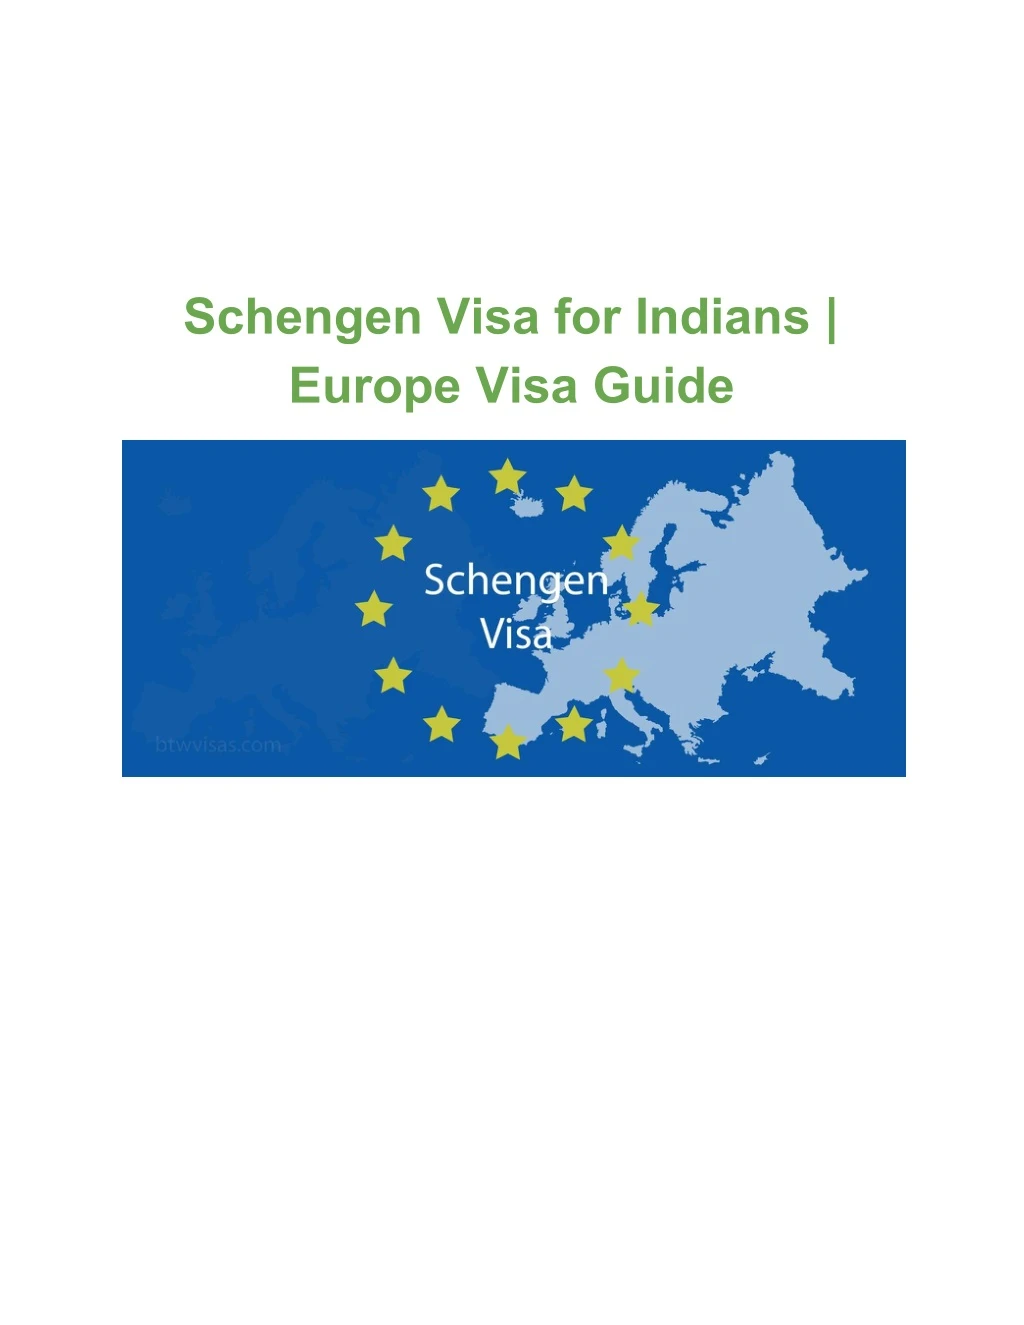 schengen visa for indians europe visa guide